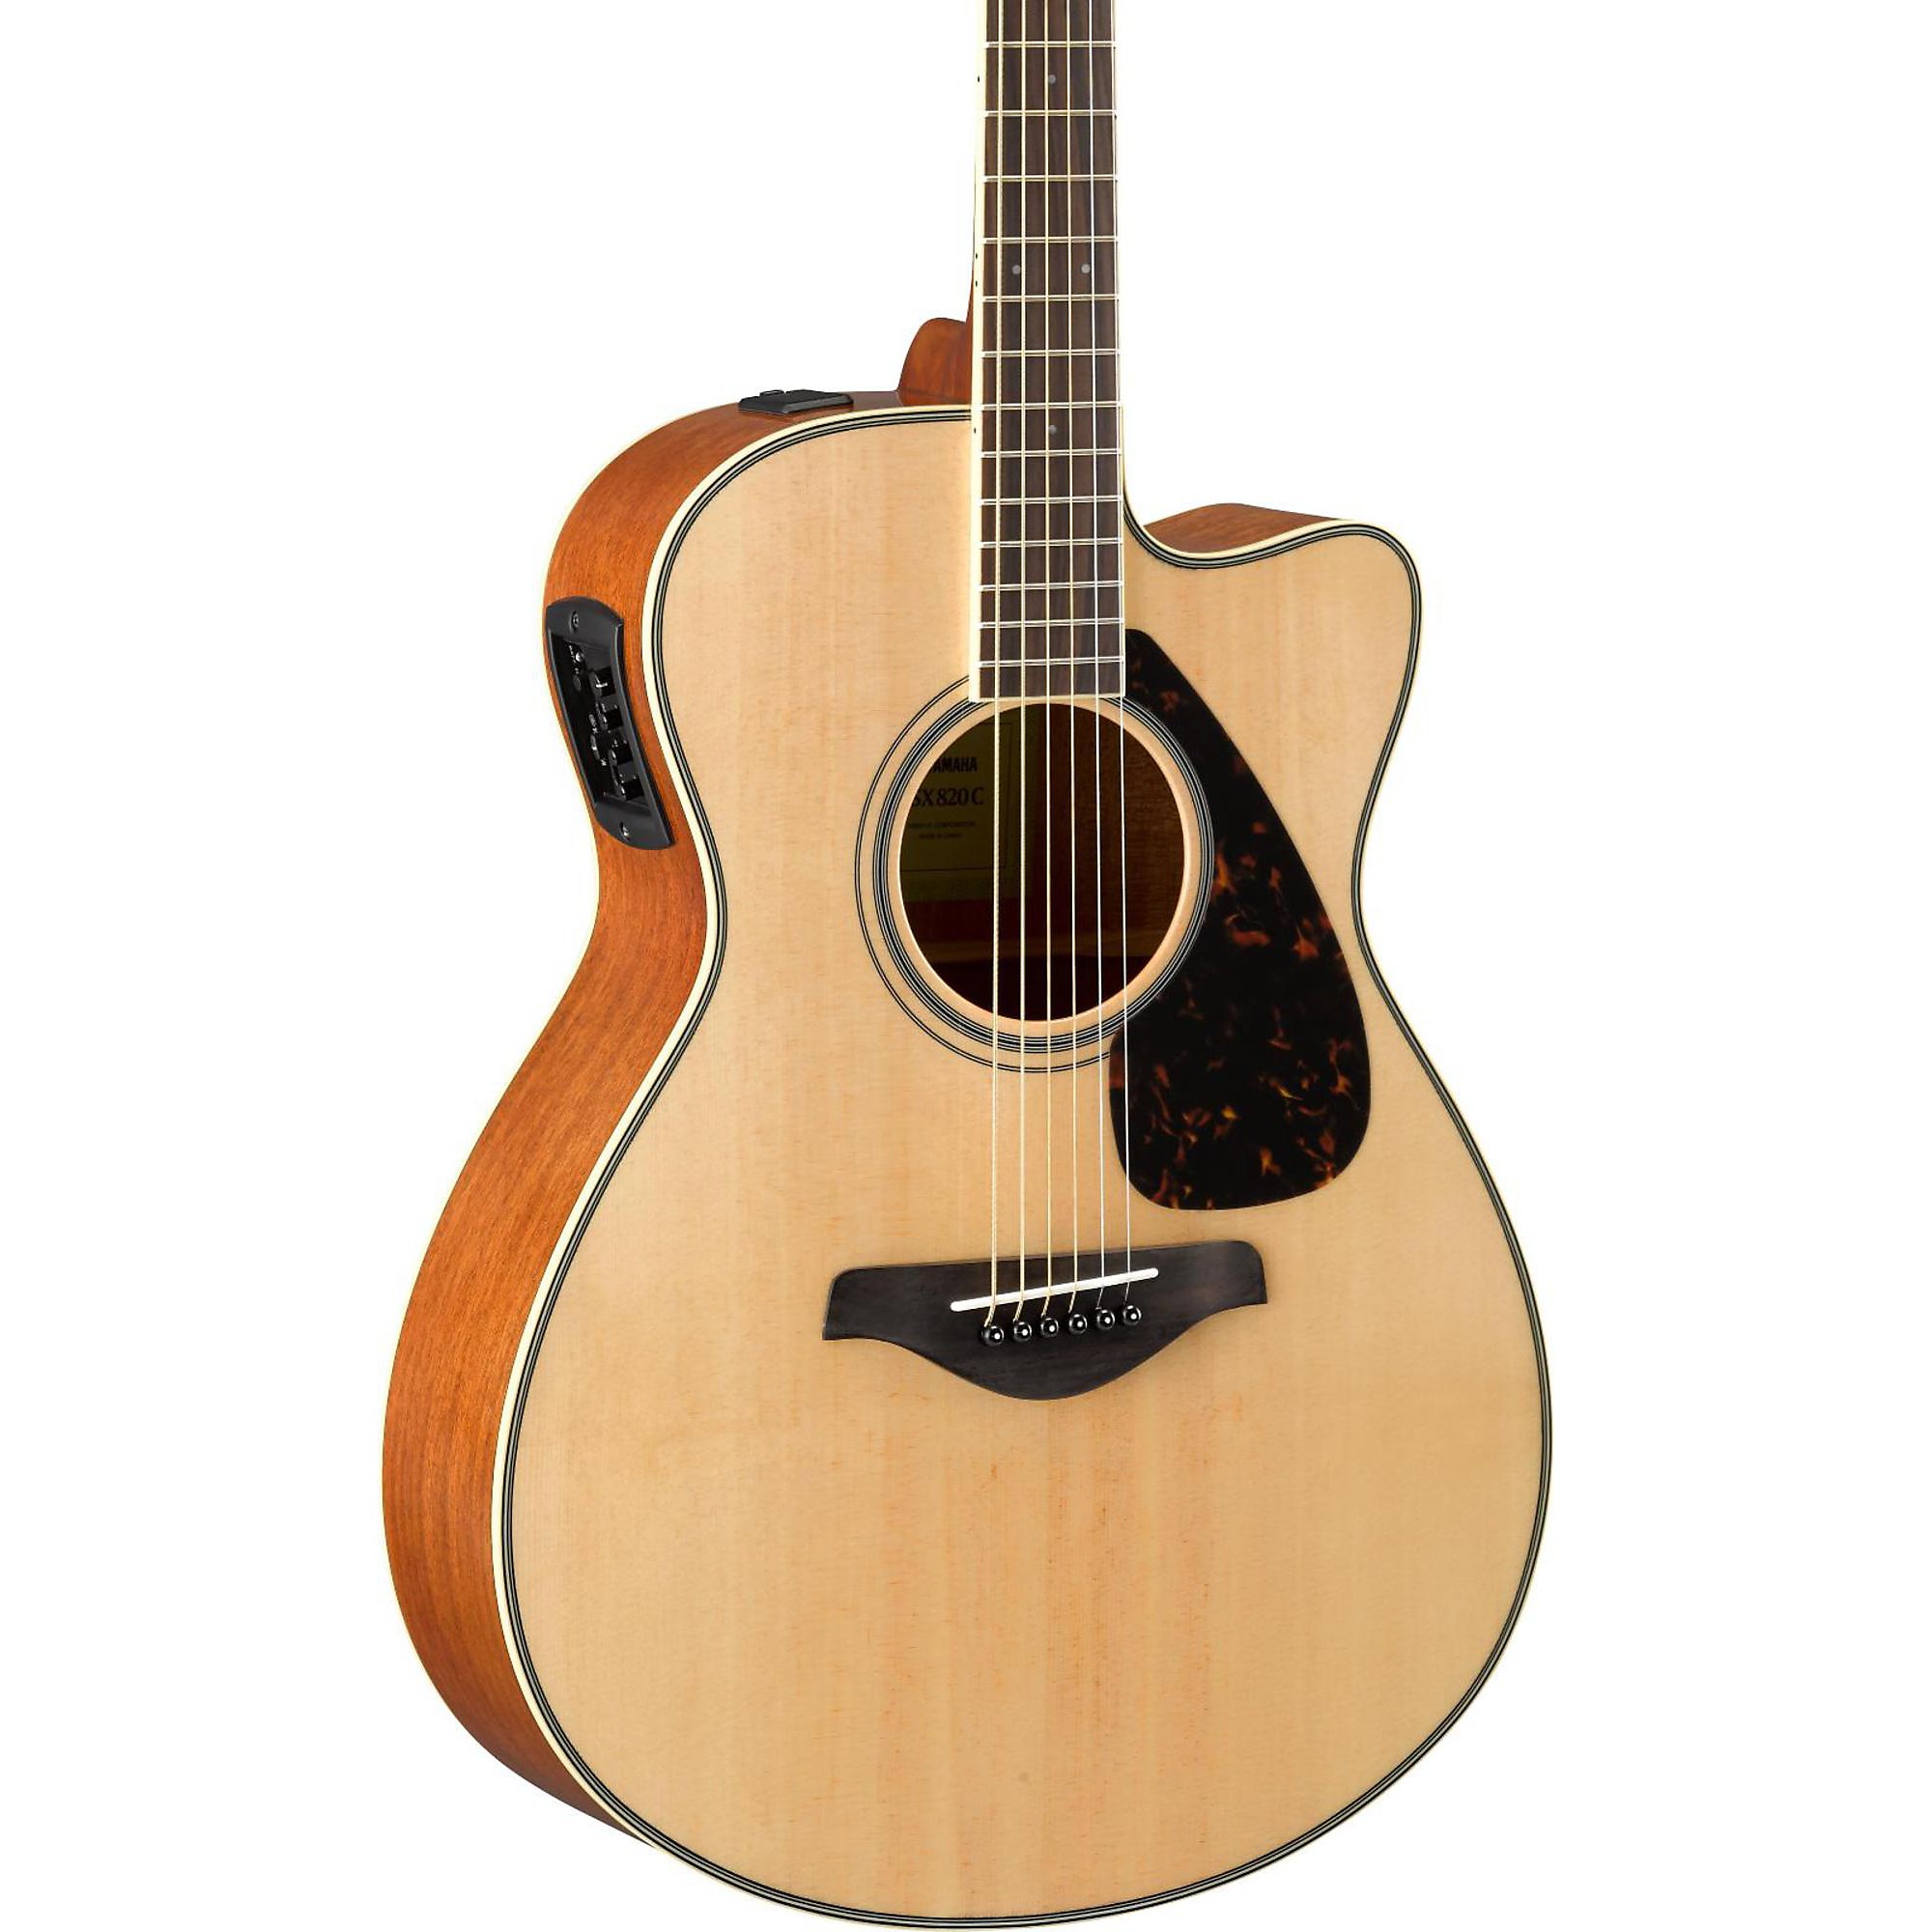 Акустически-электрическая гитара Yamaha FSX820C Small Body Natural акустическая гитара yamaha fsx820c small body acoustic electric guitar natural